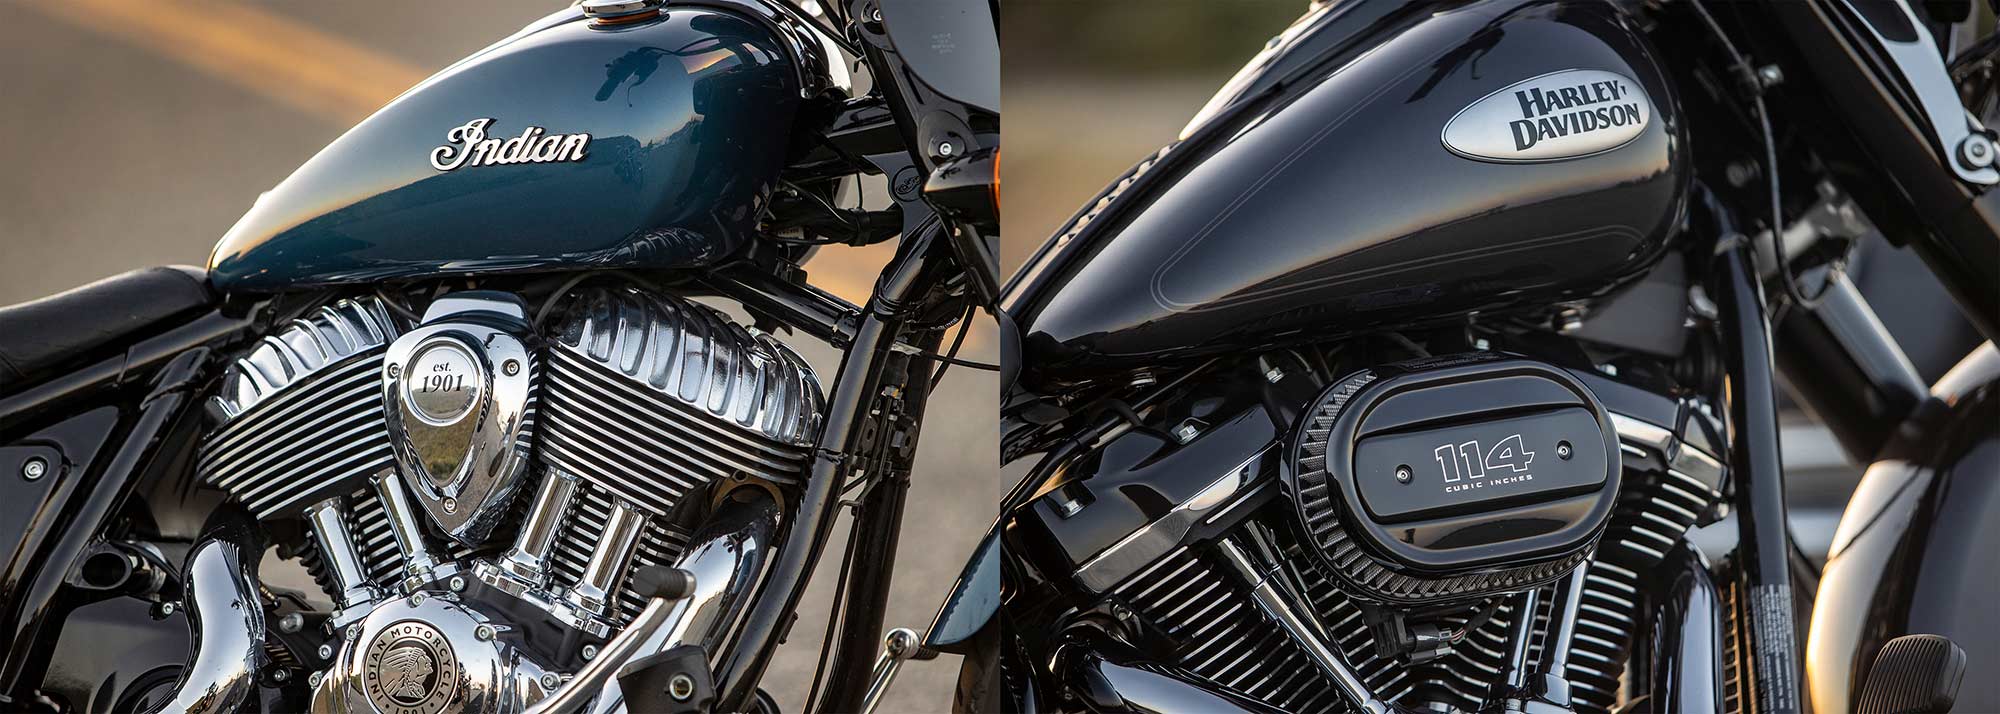 Harley Davidson Belt Loop and Metal Clip Riding Case India